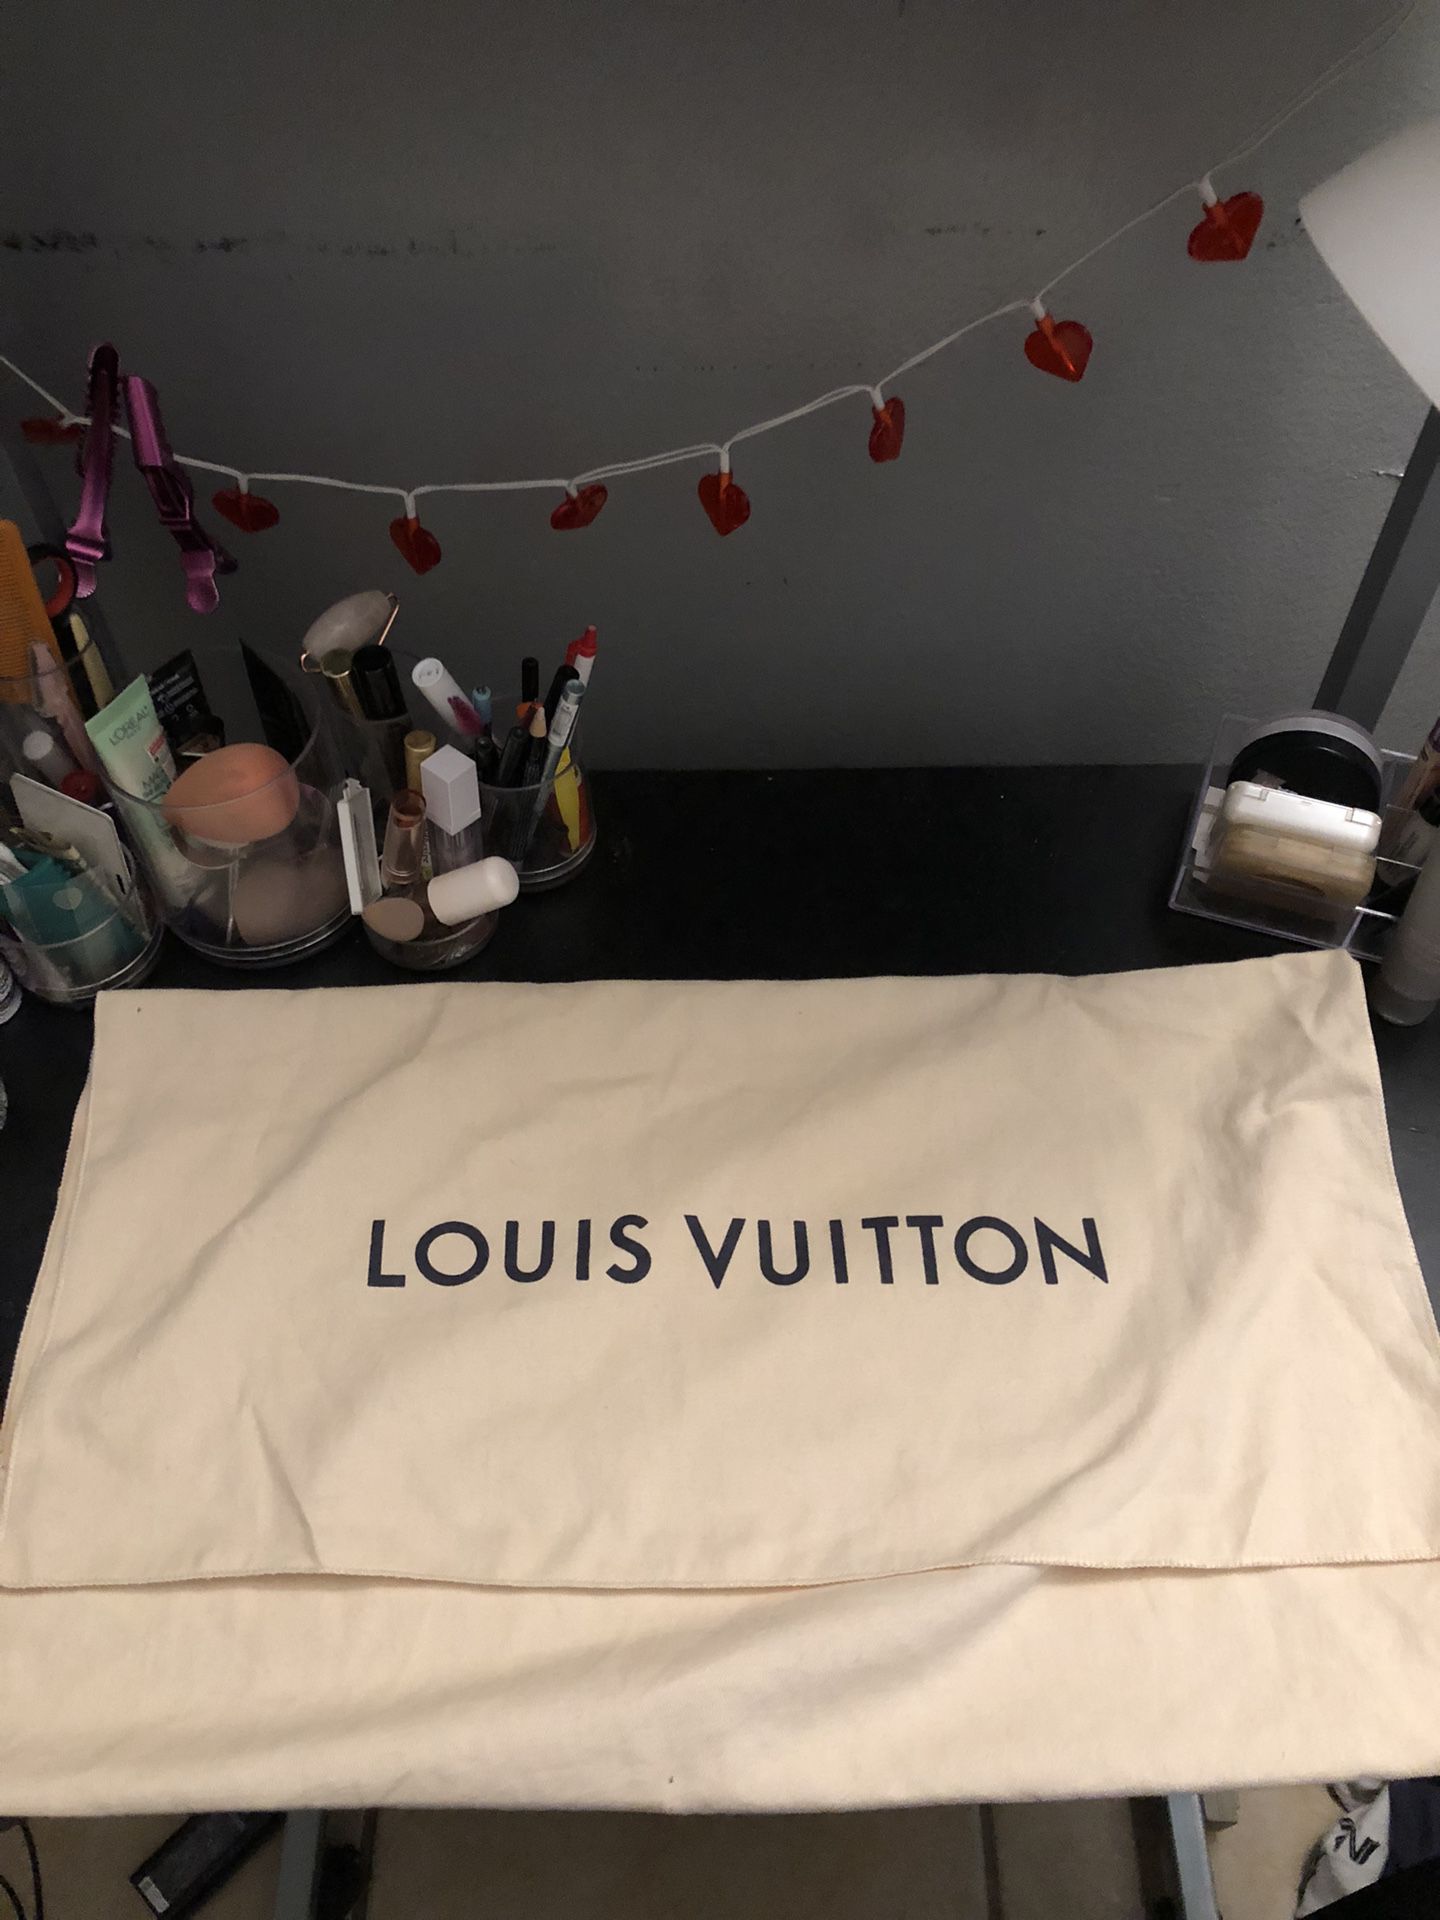 real Louis Vuitton bag